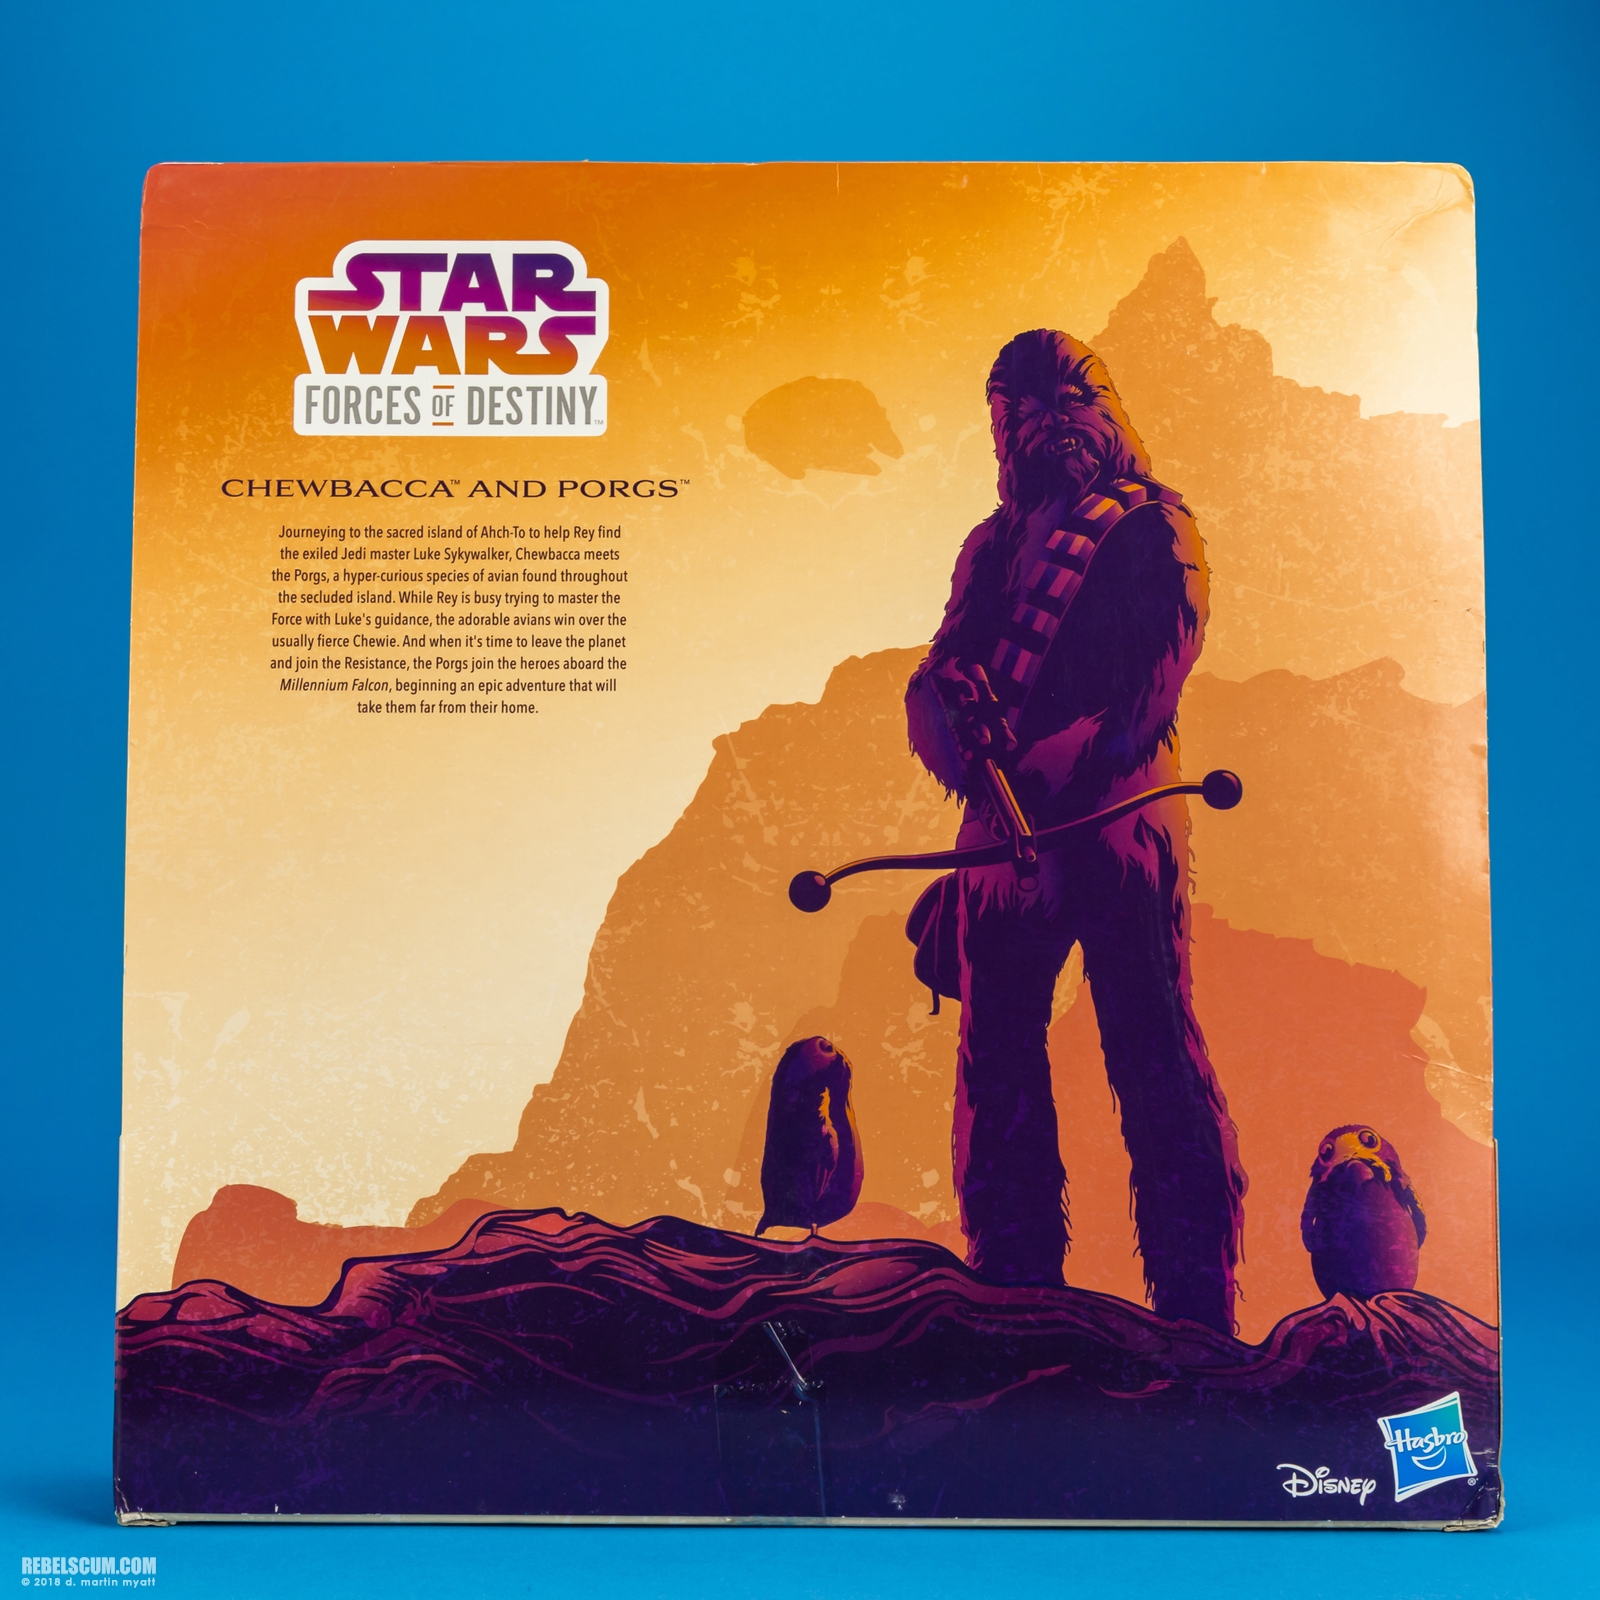 Chewbacca-Porgs-Forces-of-Destiny-Hasbro-Star-Wars-021.jpg